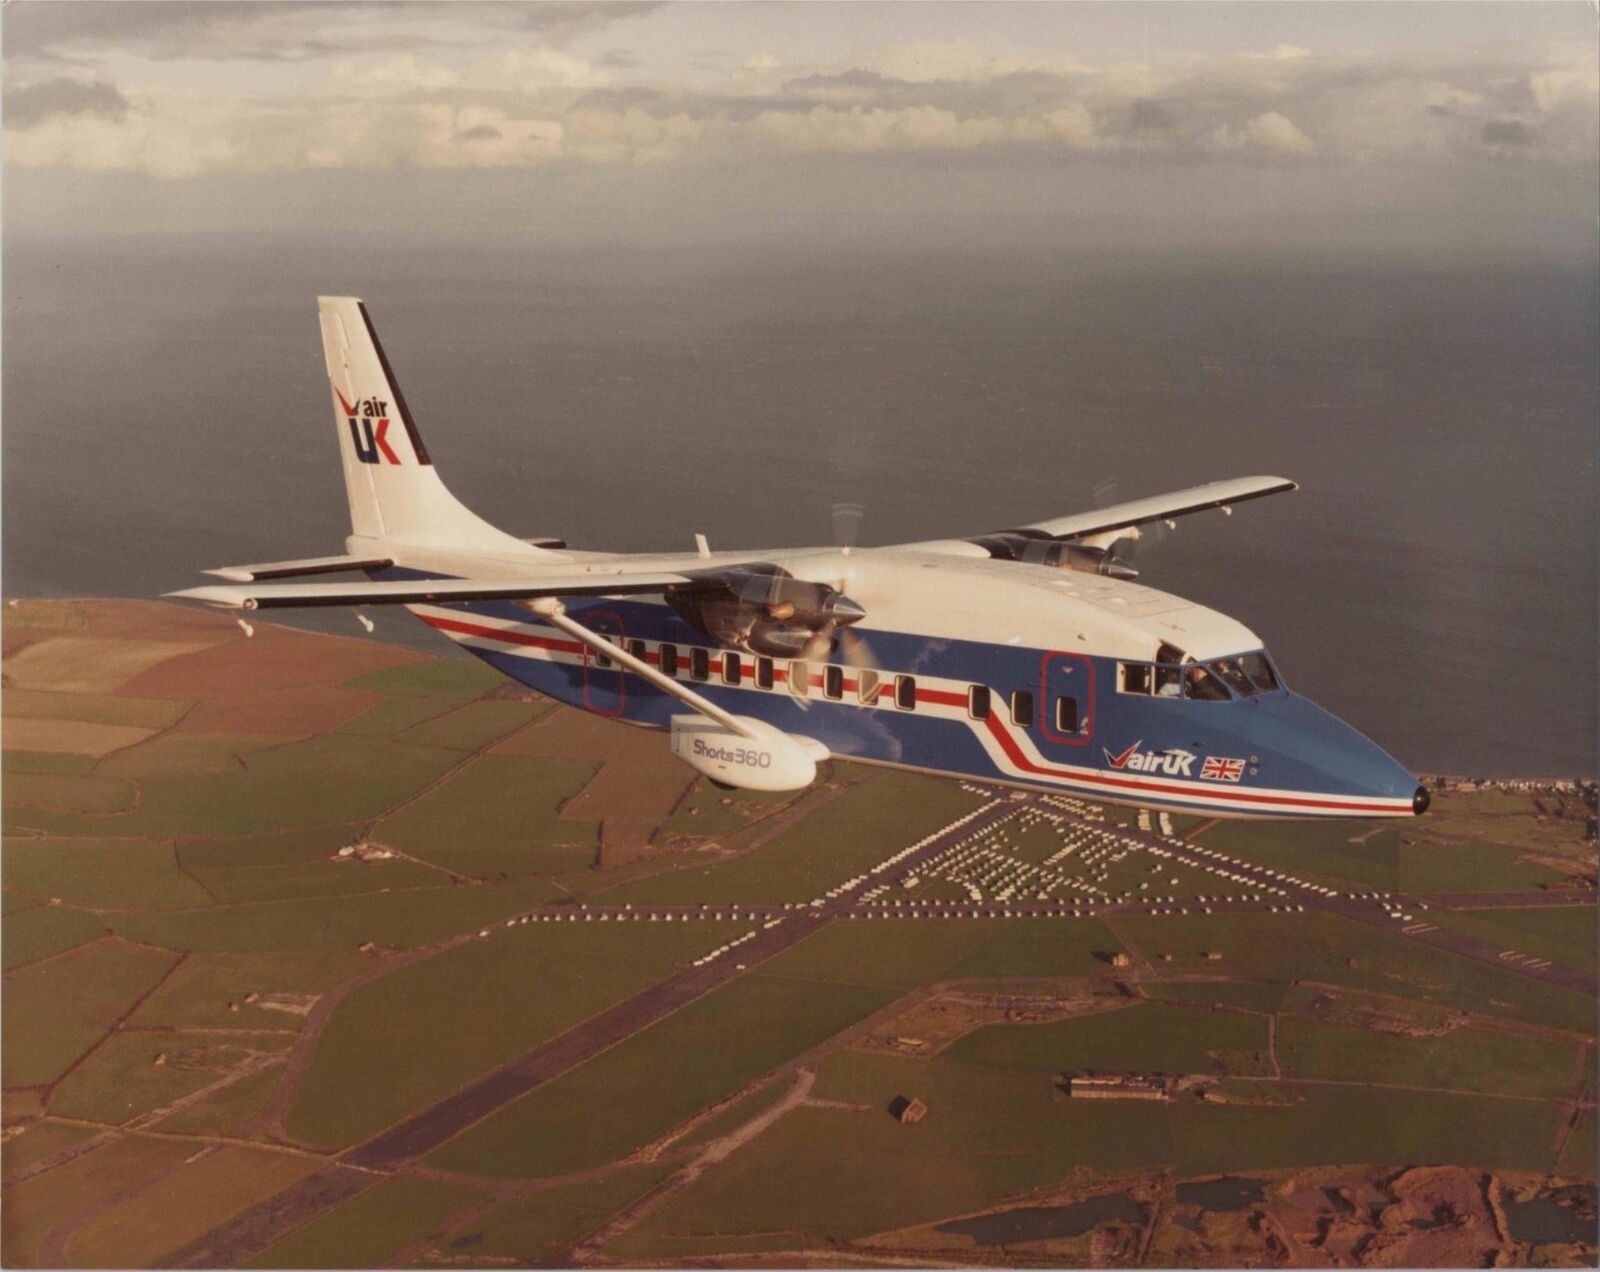 AIR UK SHORT 360 LARGE ORIGINAL VINTAGE SHORTS MANUFACTURERS PHOTO SD360